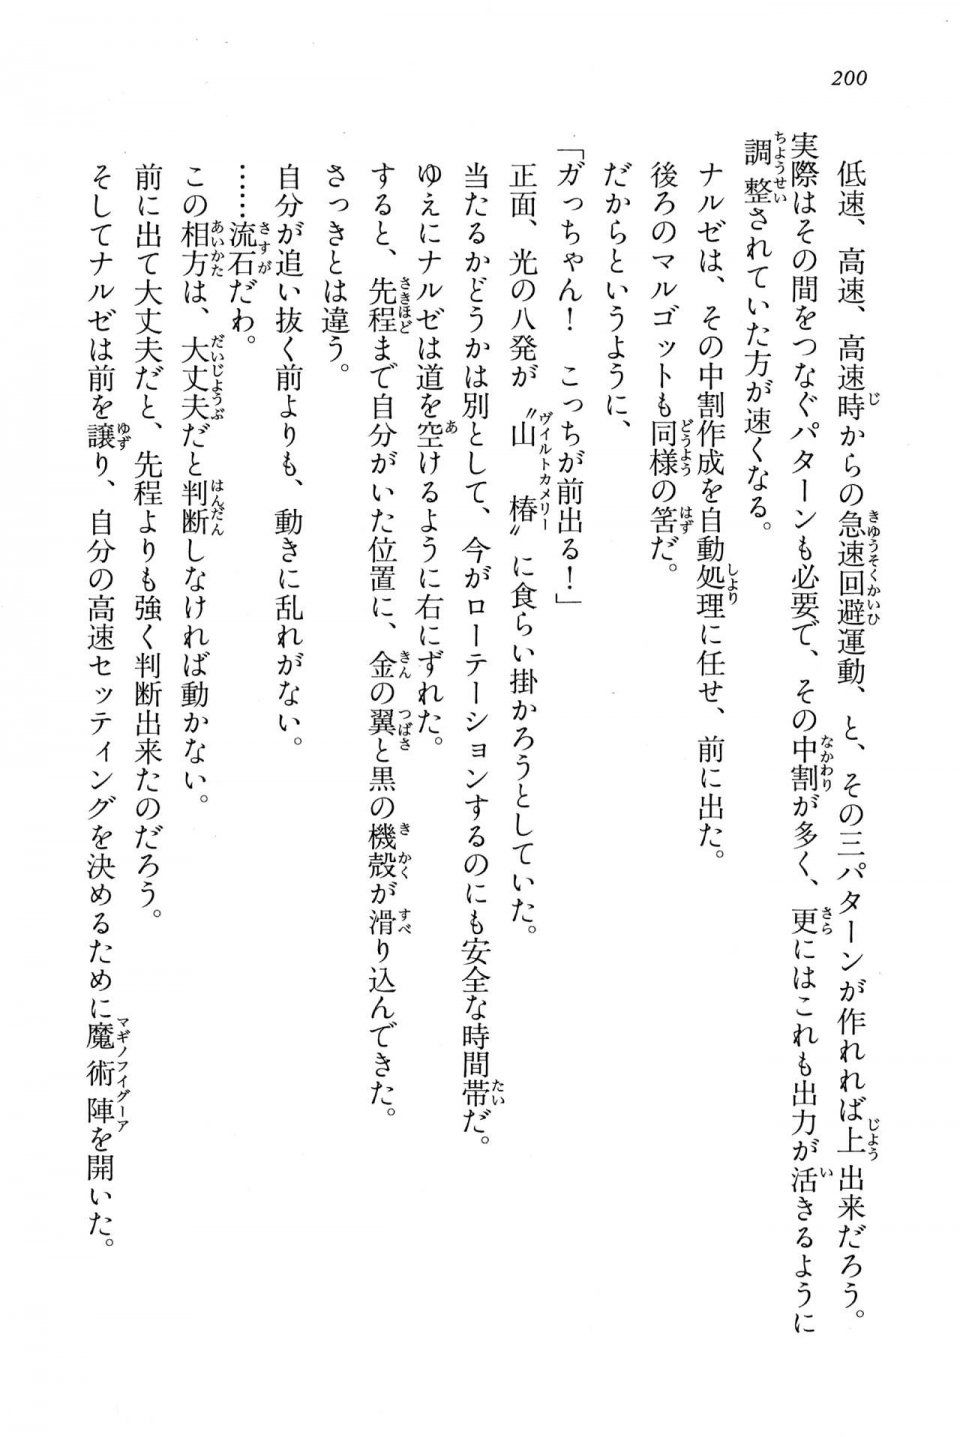 Kyoukai Senjou no Horizon BD Special Mininovel Vol 7(4A) - Photo #204